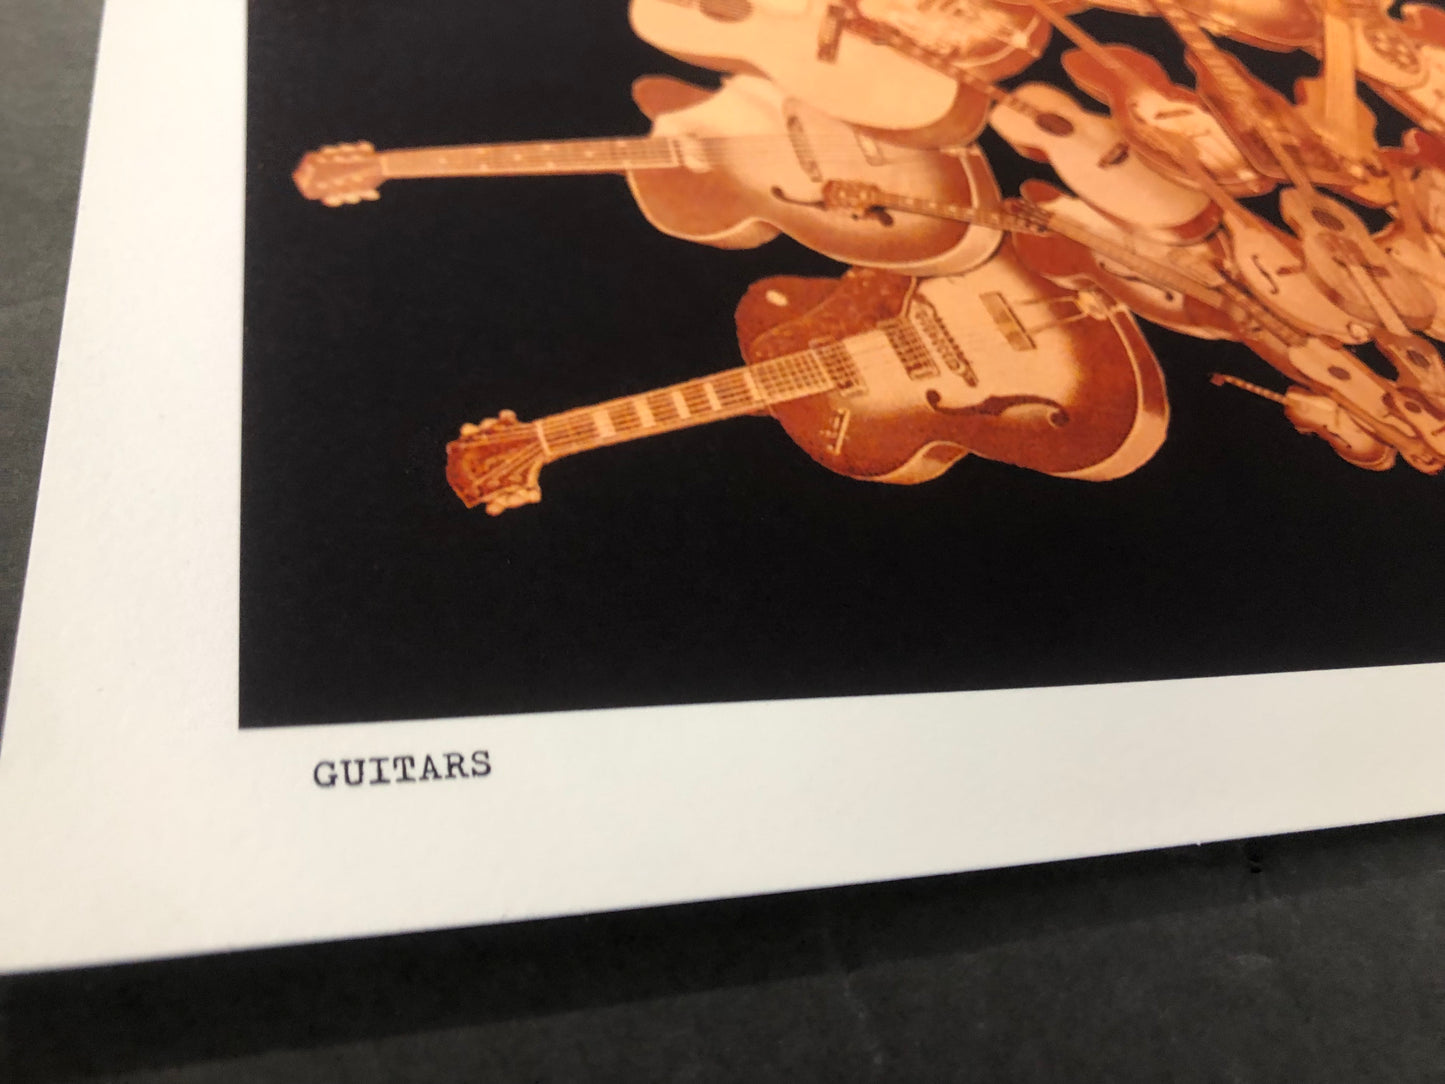 Winston Smith "Guitars" Print